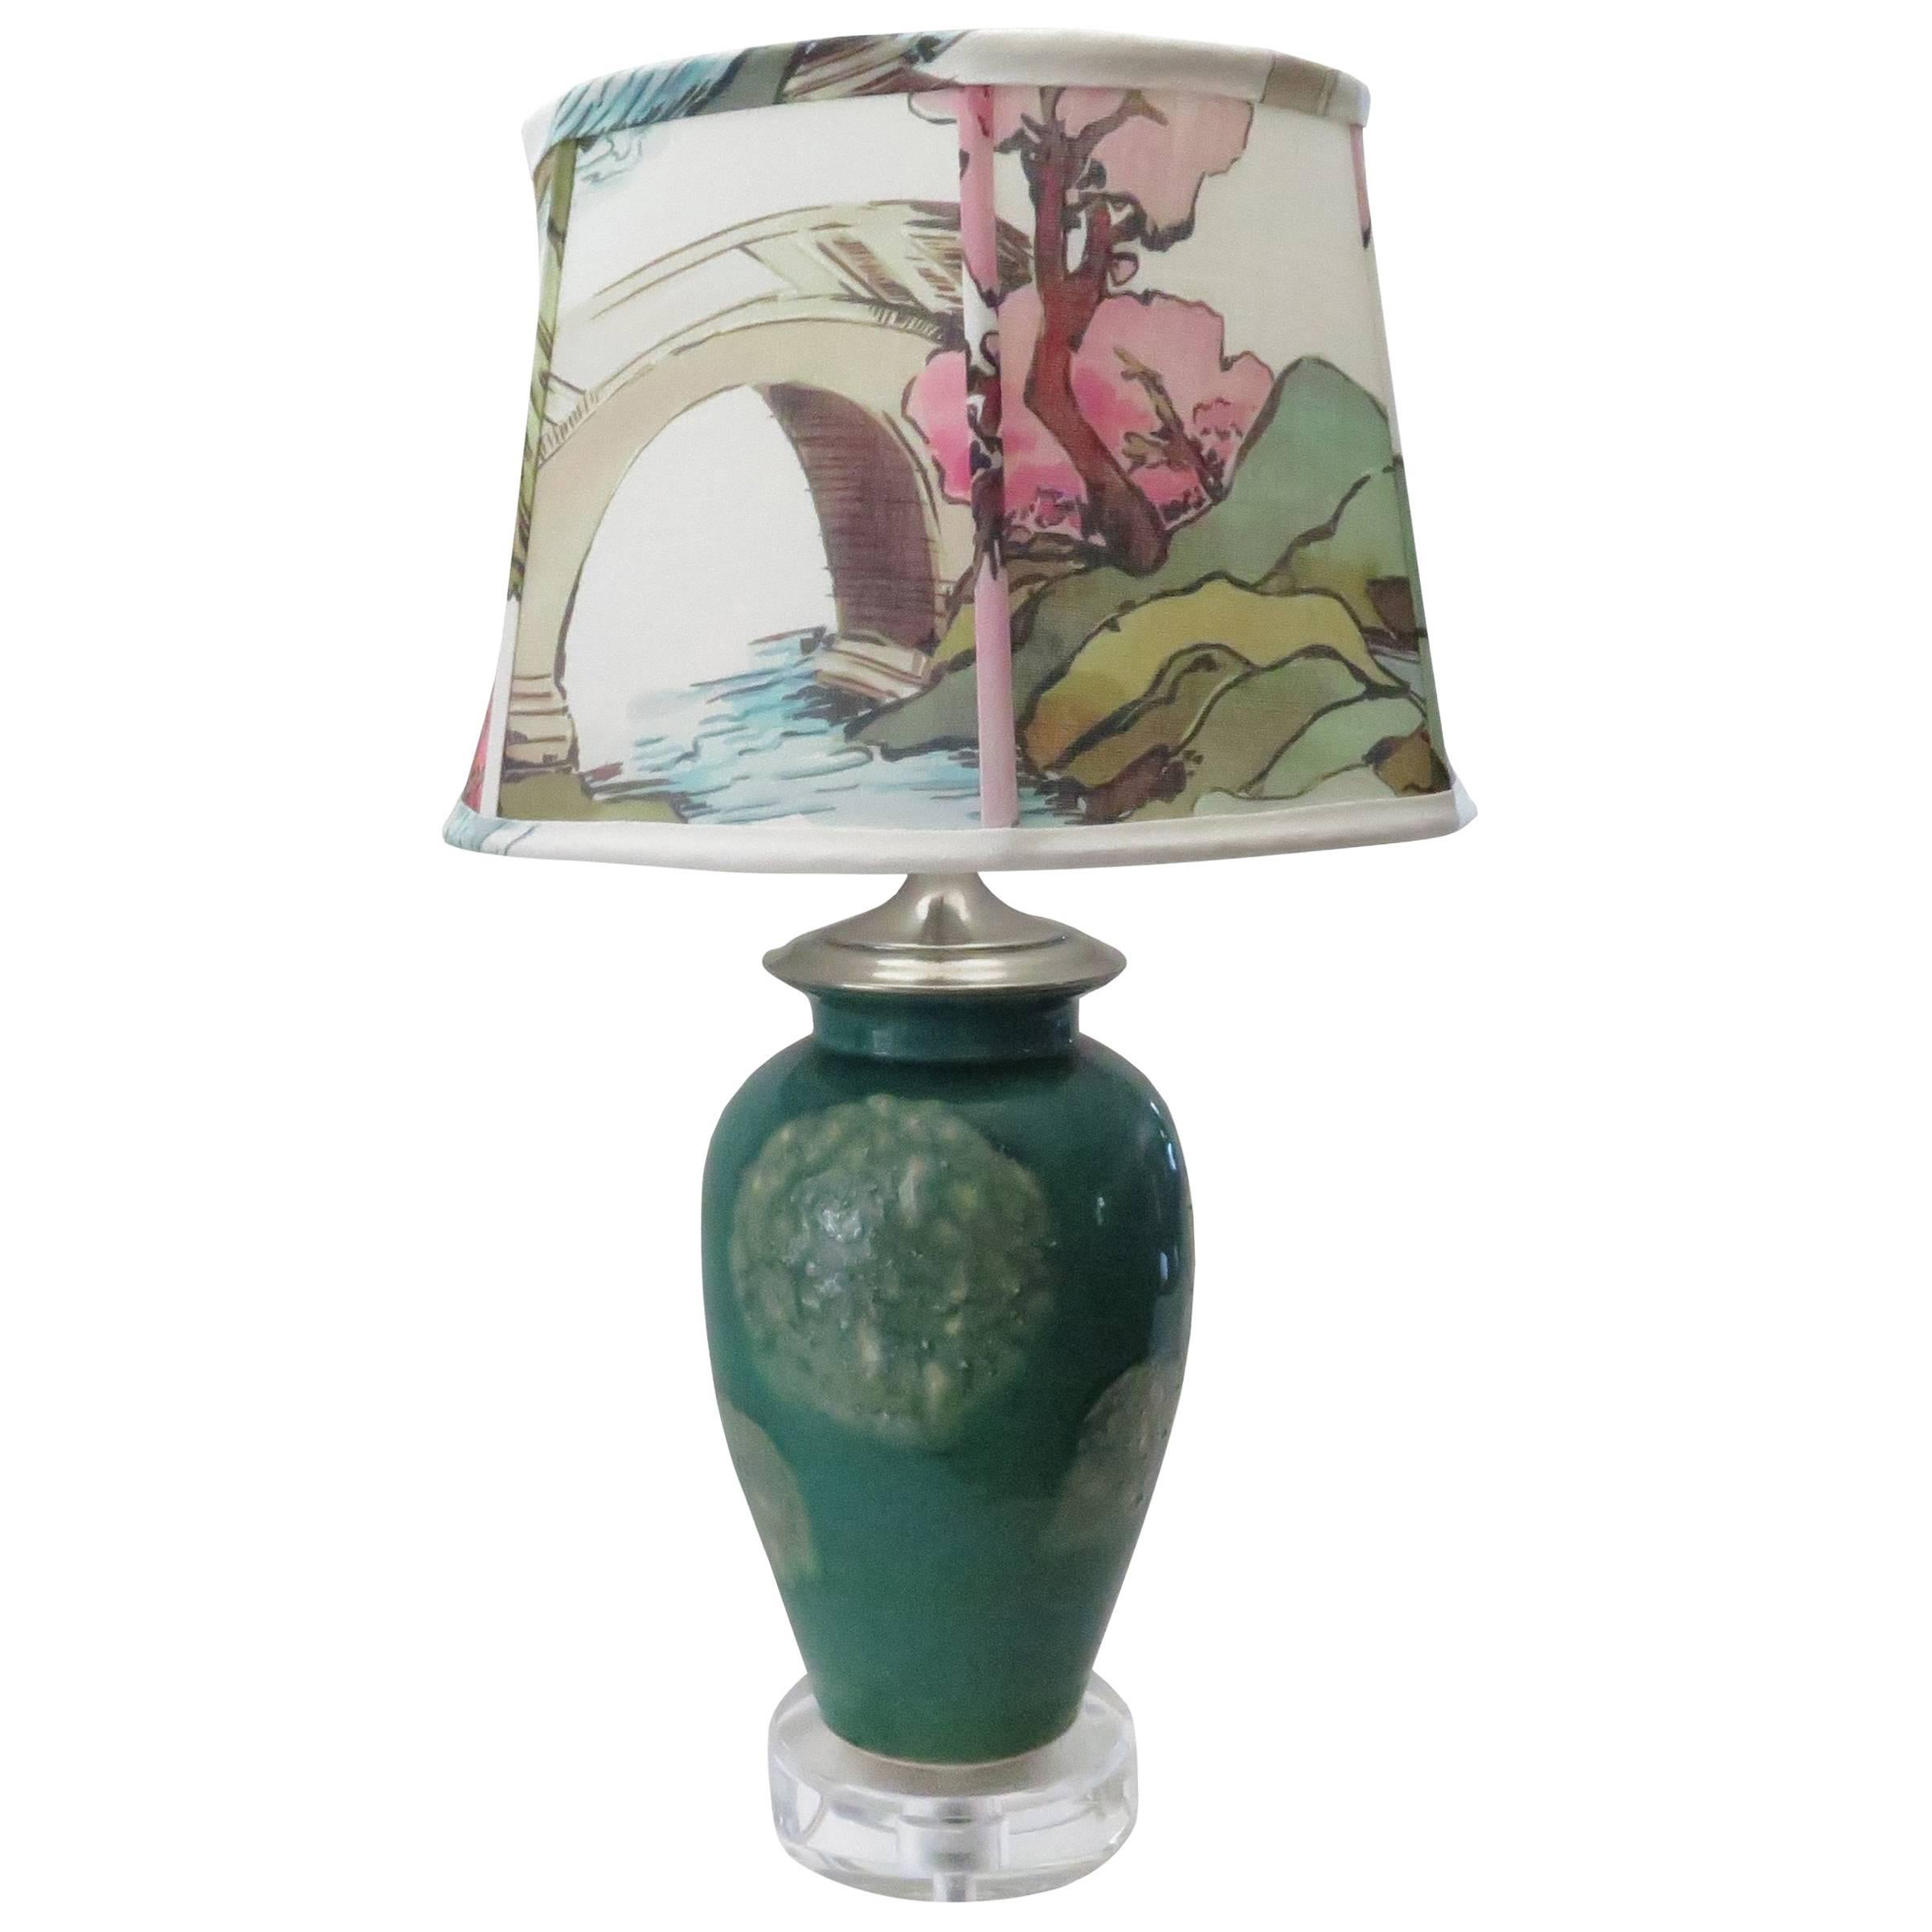 Maison Maison Custom Kravet Couture Lampshade and Vintage Ceramic Jar Table Lamp